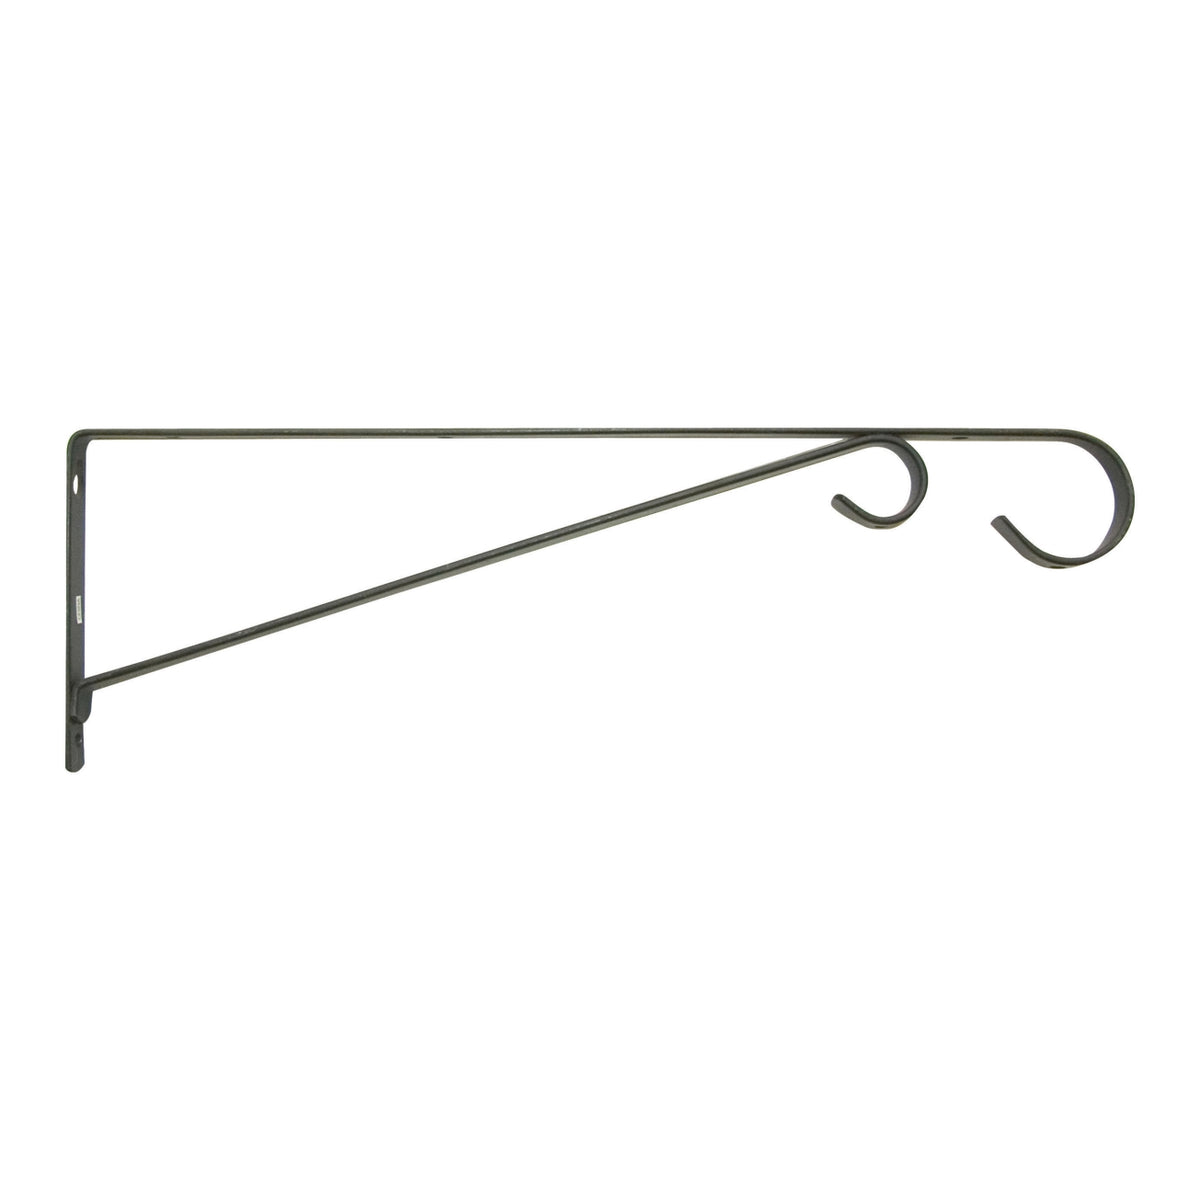 buy plant brackets & hooks at cheap rate in bulk. wholesale & retail landscape supplies & farm fencing store.